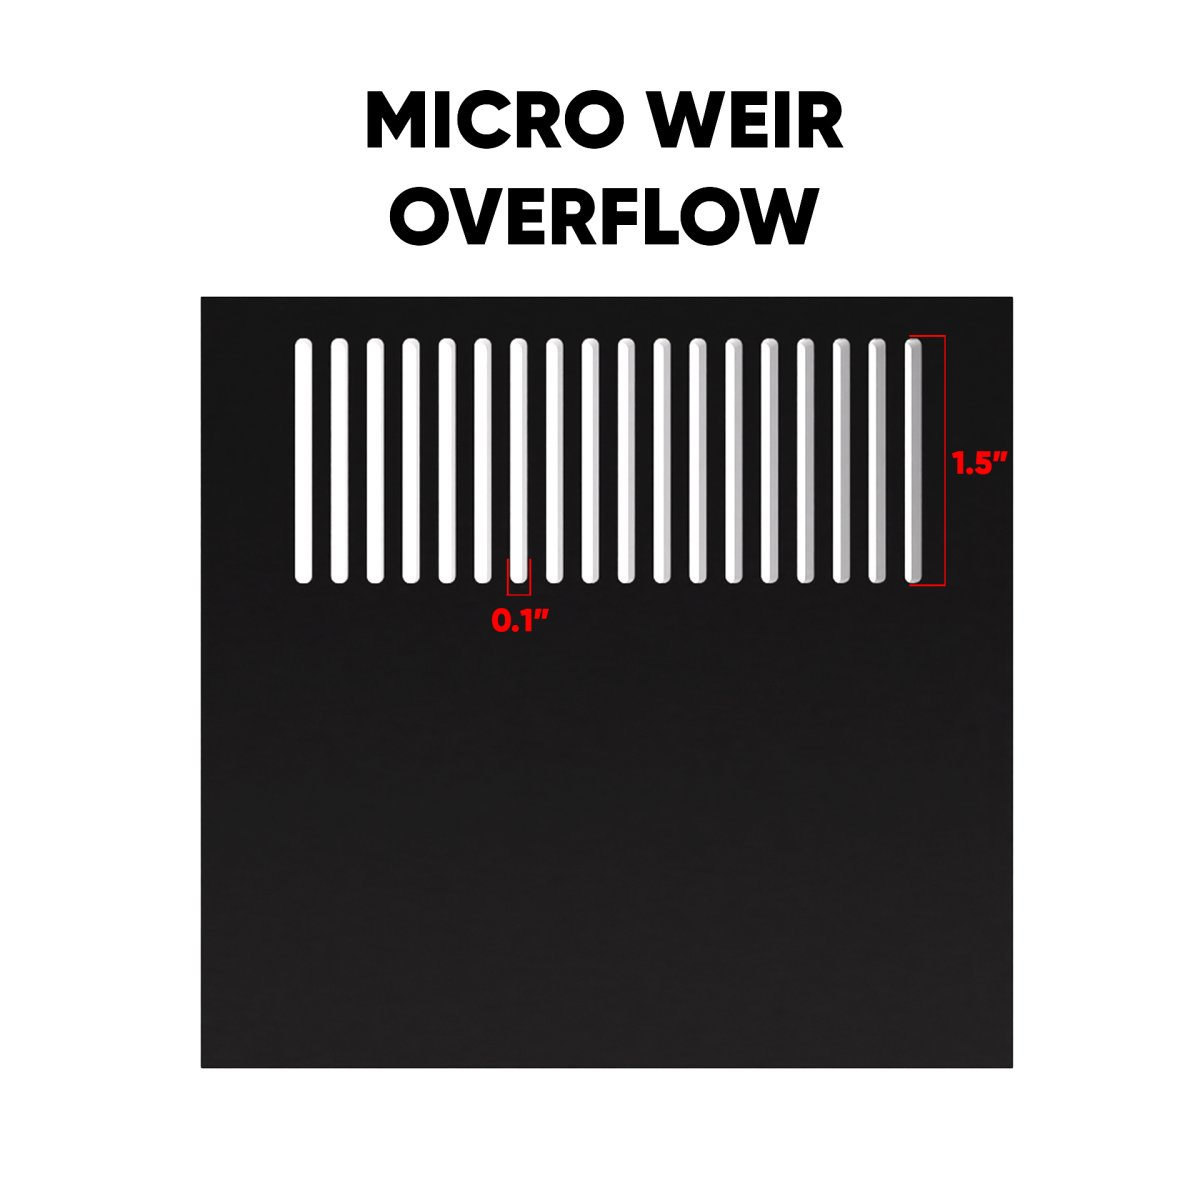 Overflow Micro Weir.jpg